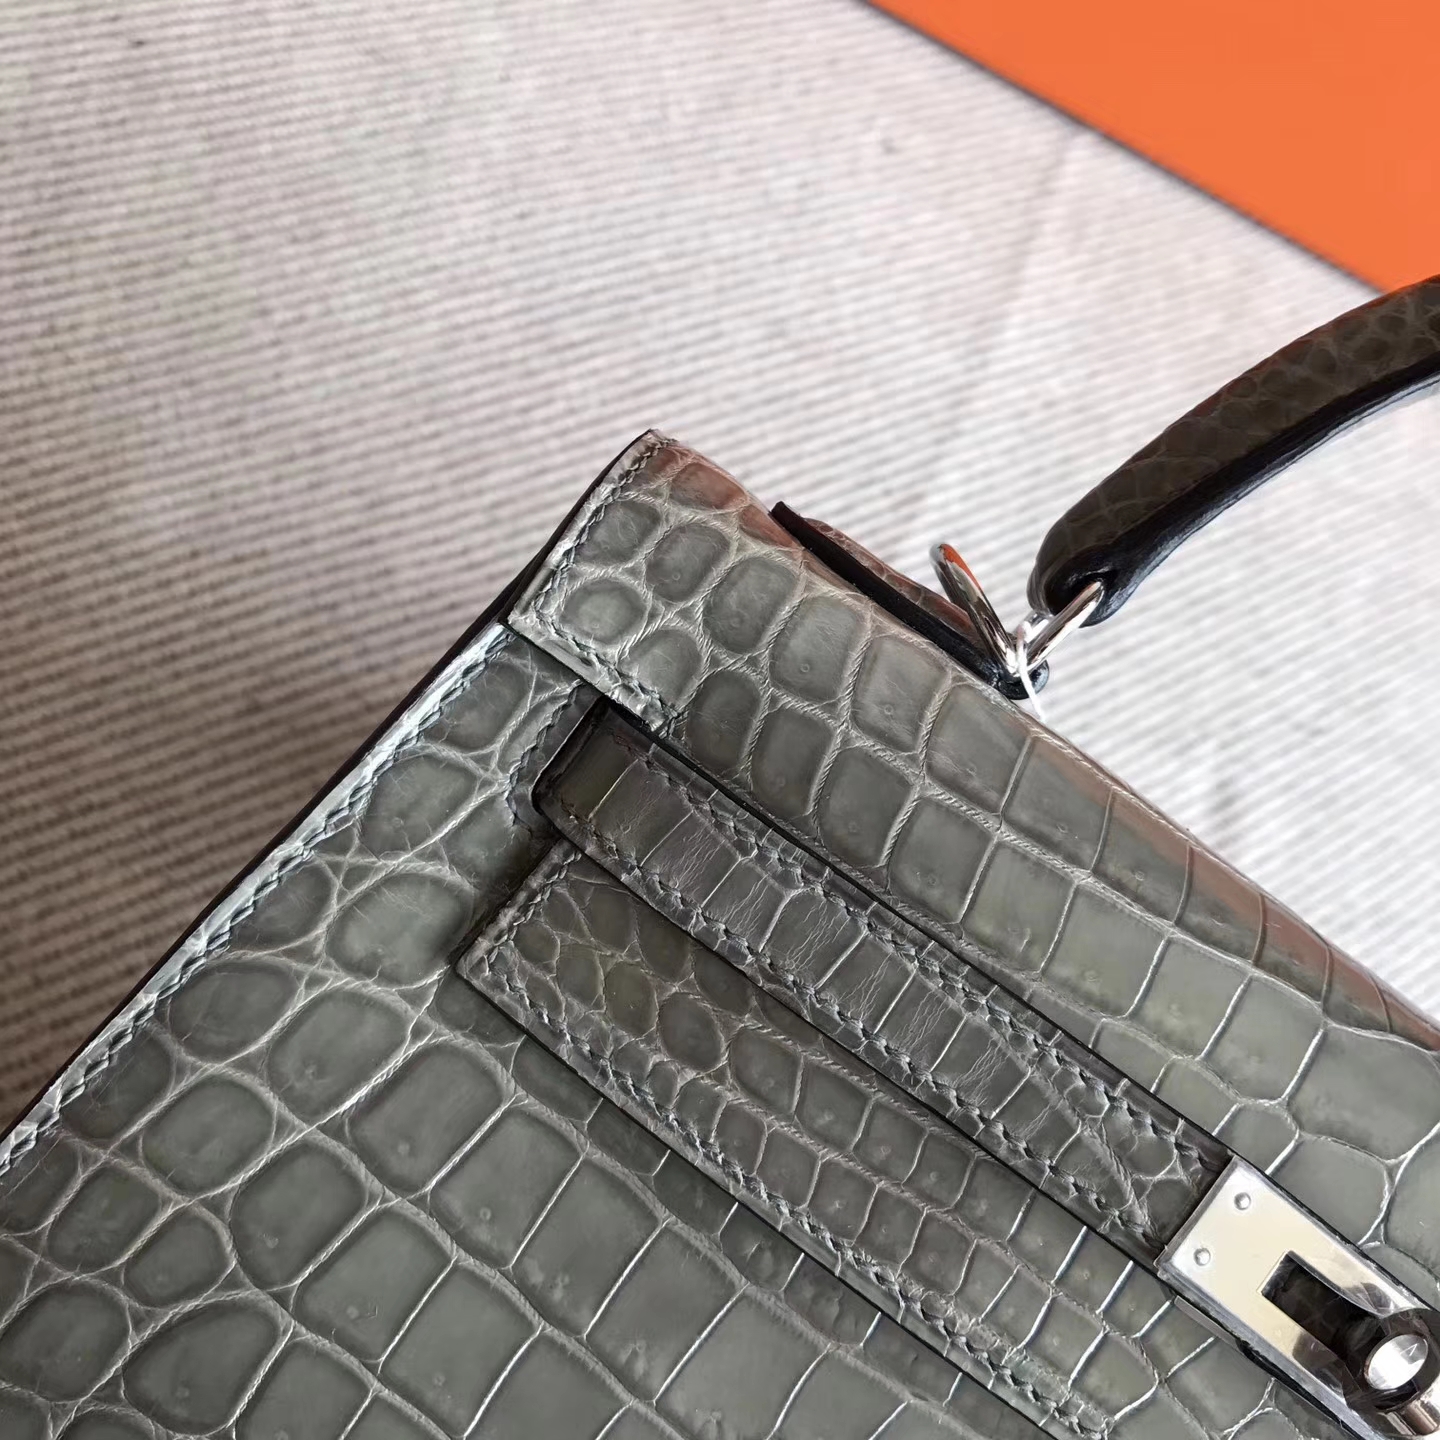 Discount Hermes Crocodile Shiny Leather Kelly Bag25cm in C81 Gris Tourterelle